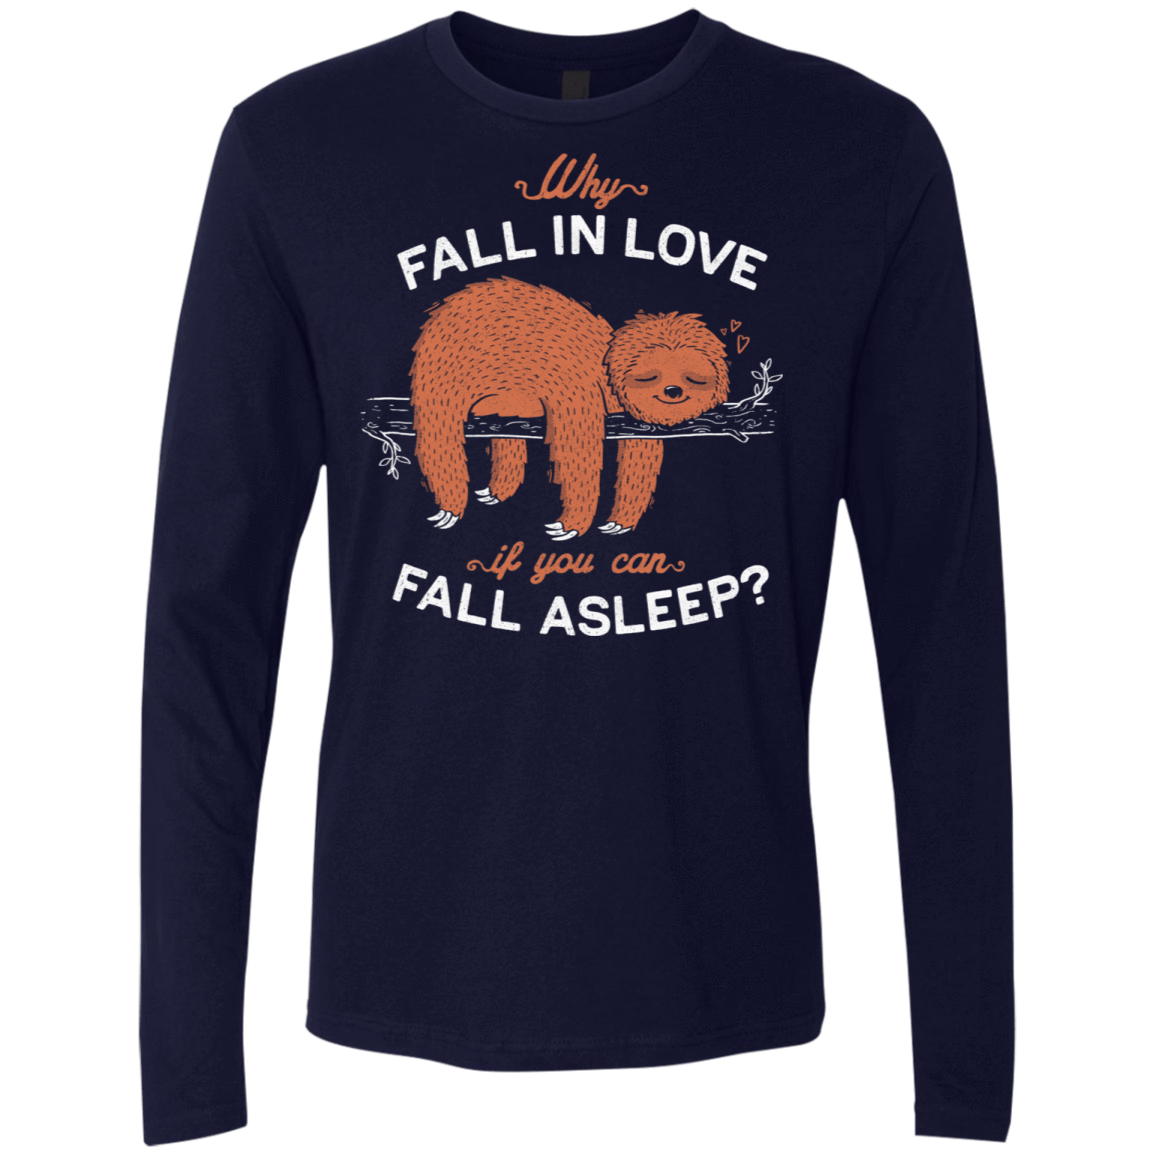 T-Shirts Midnight Navy / S Fall Asleep Men's Premium Long Sleeve